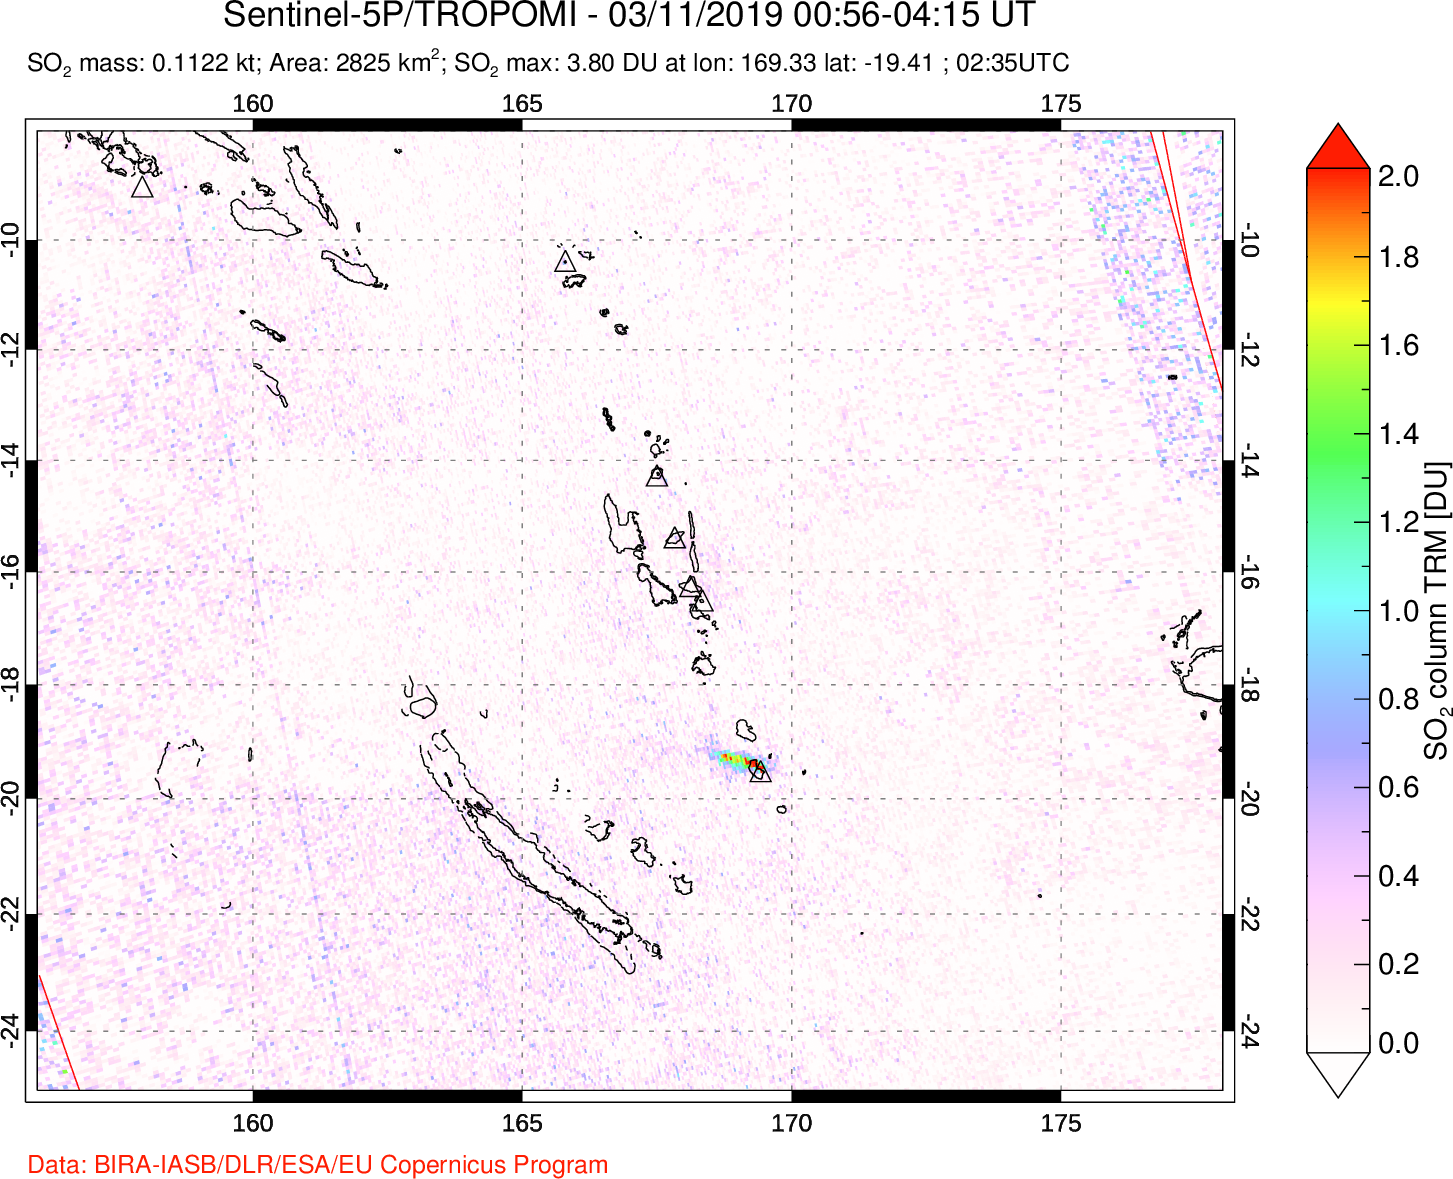 A sulfur dioxide image over Vanuatu, South Pacific on Mar 11, 2019.